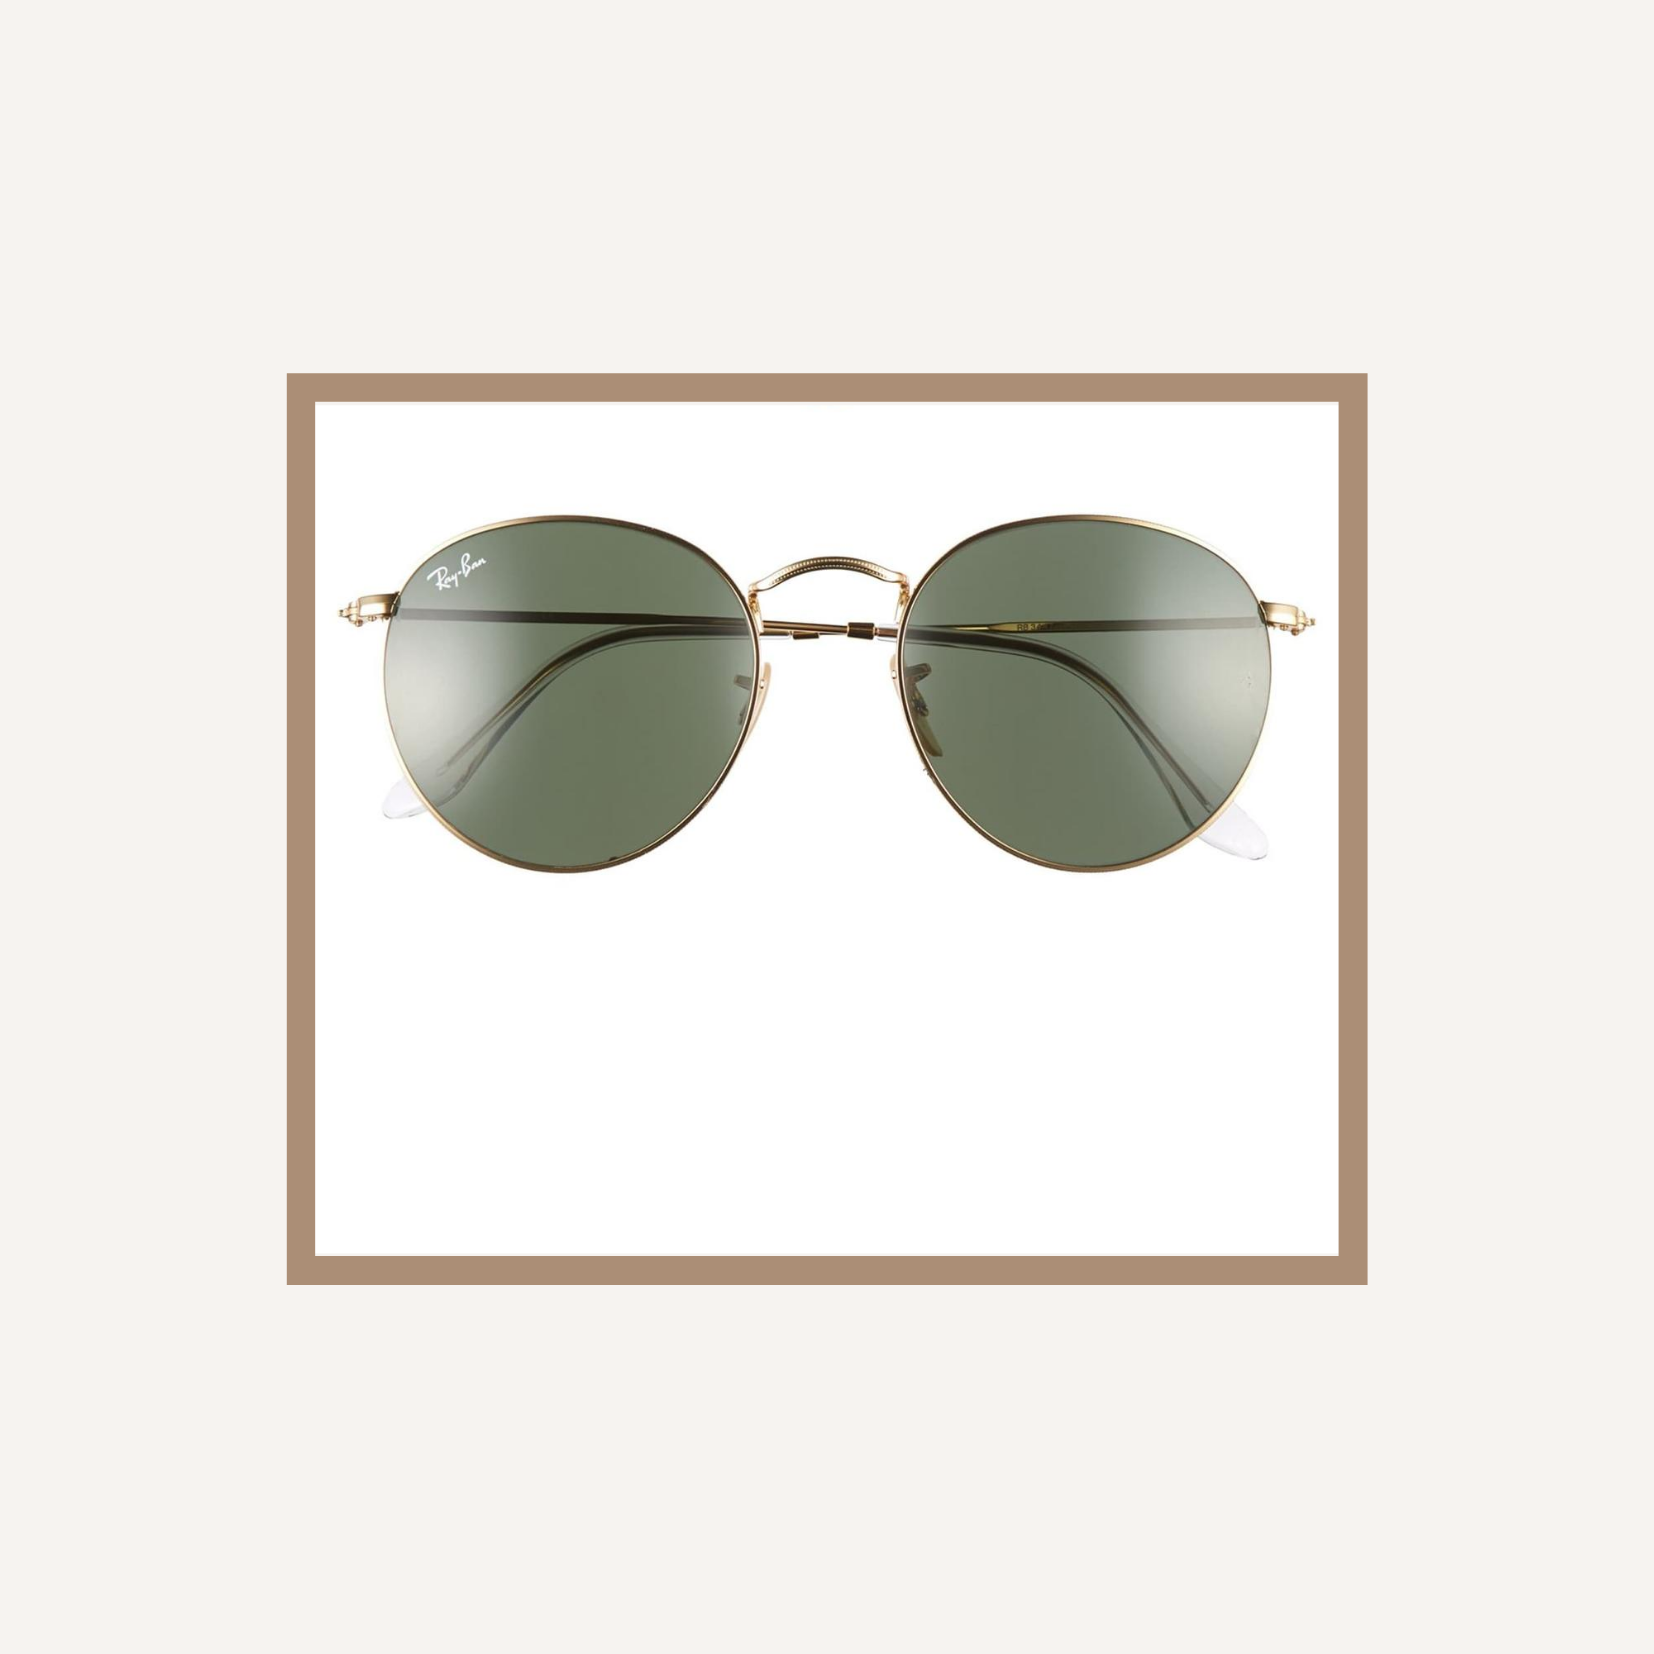 Favorite Sunglasses for All Seasons | Ray Ban Sunglasses | Louella Reese